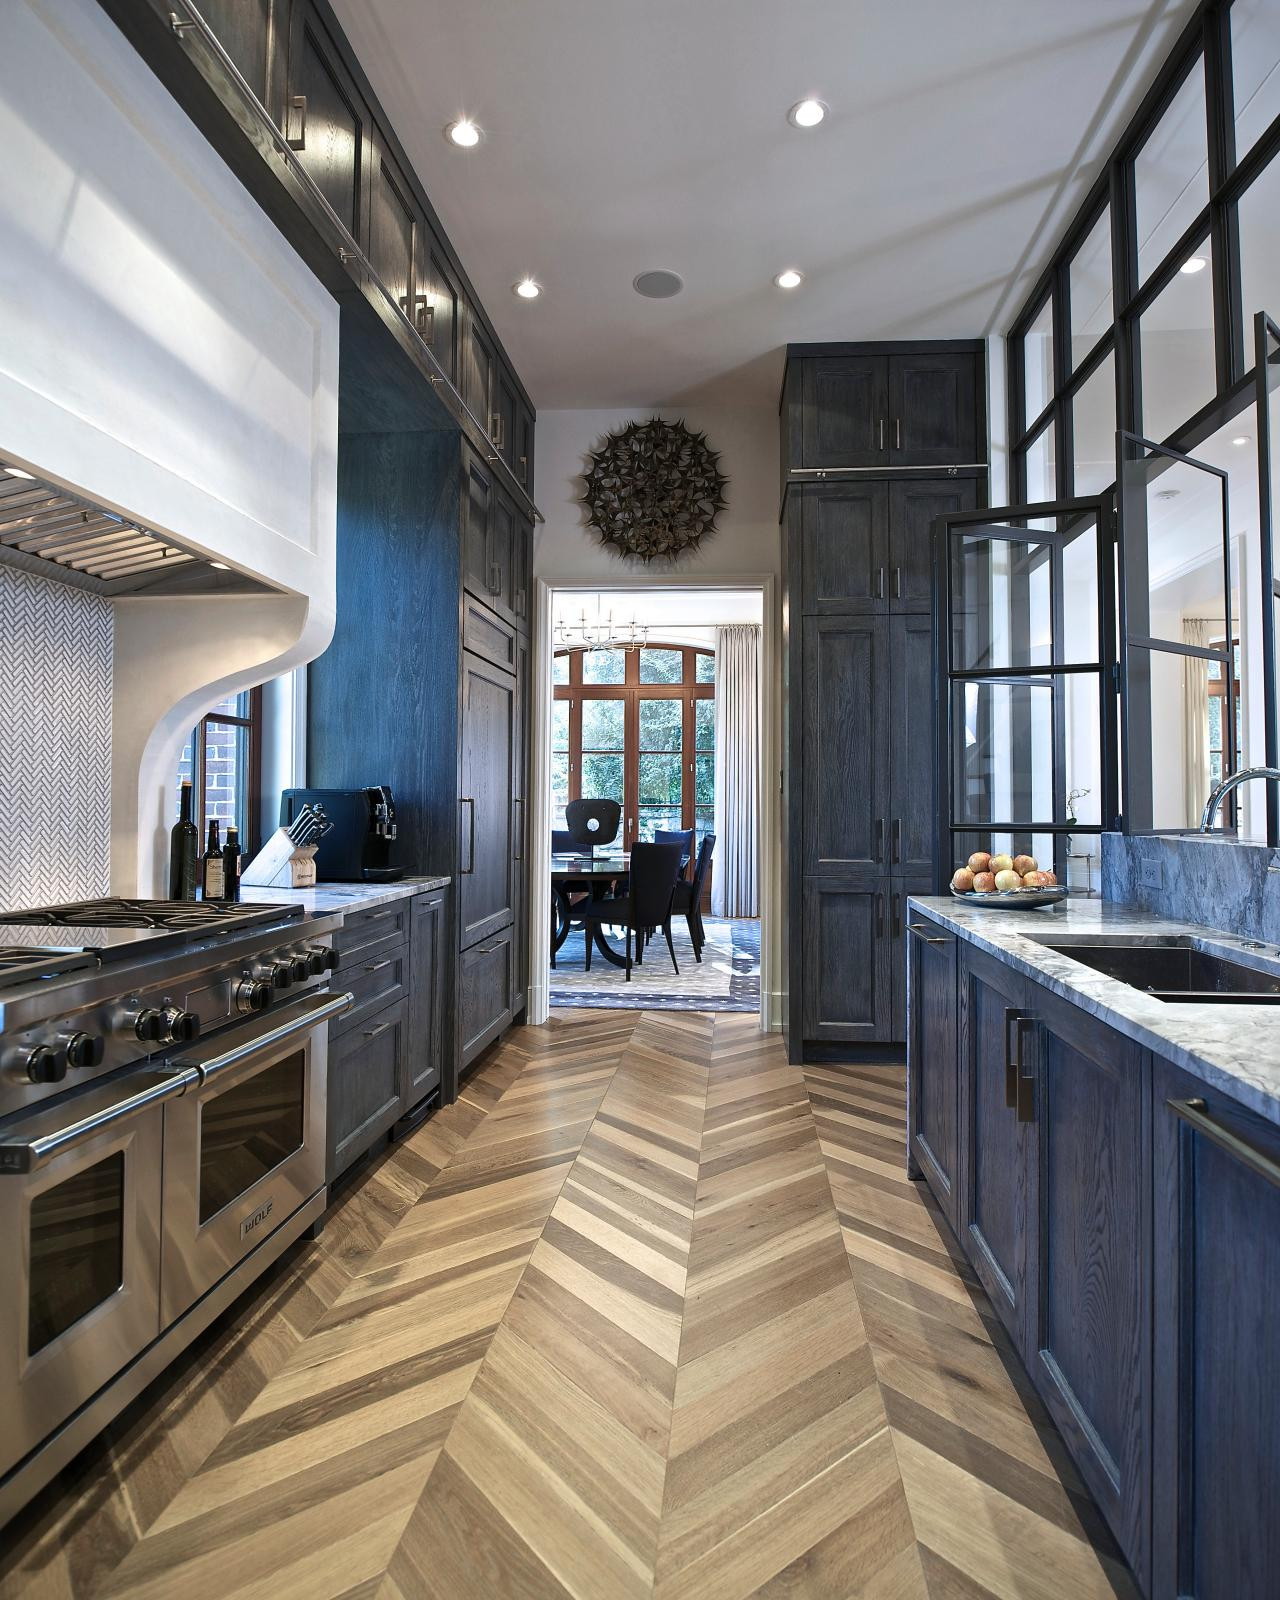 Kitchen Flooring Options and Design Ideas  HGTV